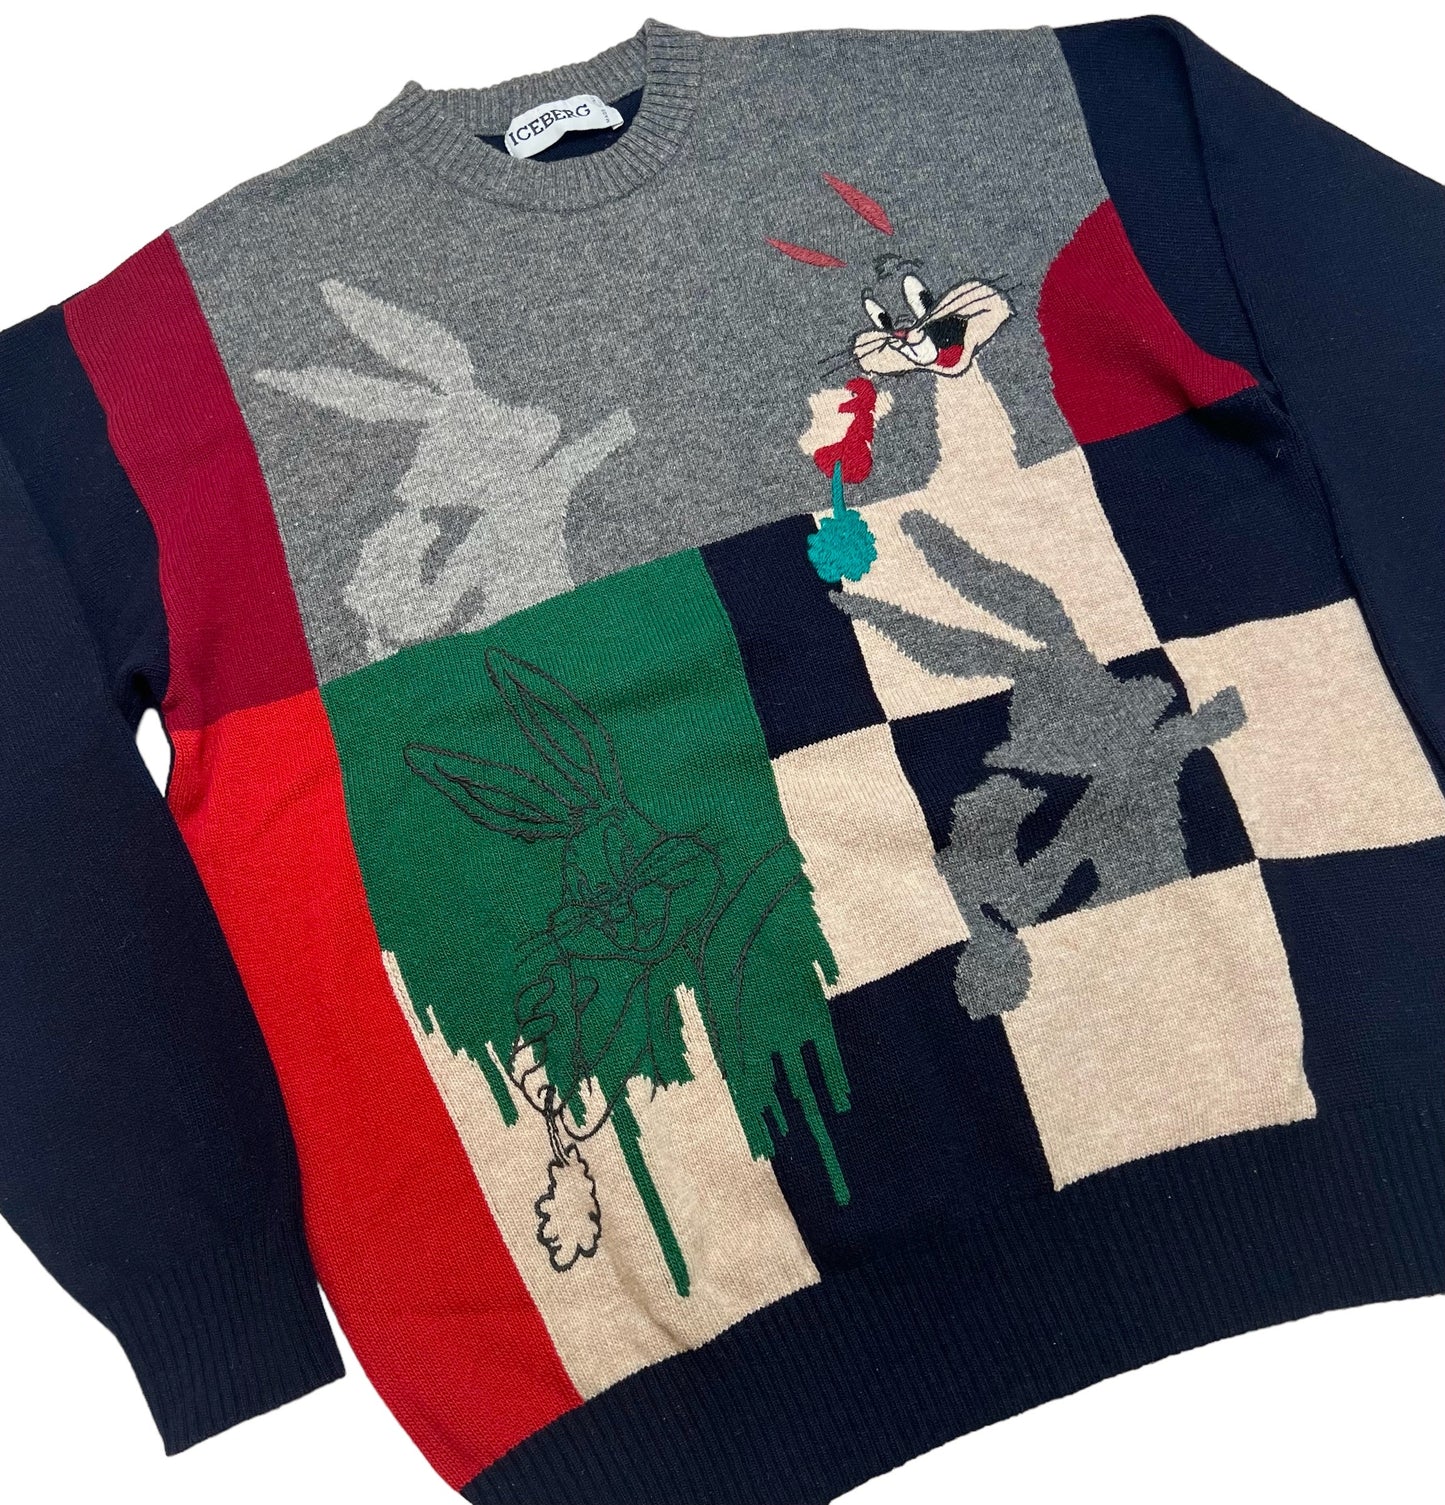 1993 Iceberg "Bugs Bunny" crewneck sweater